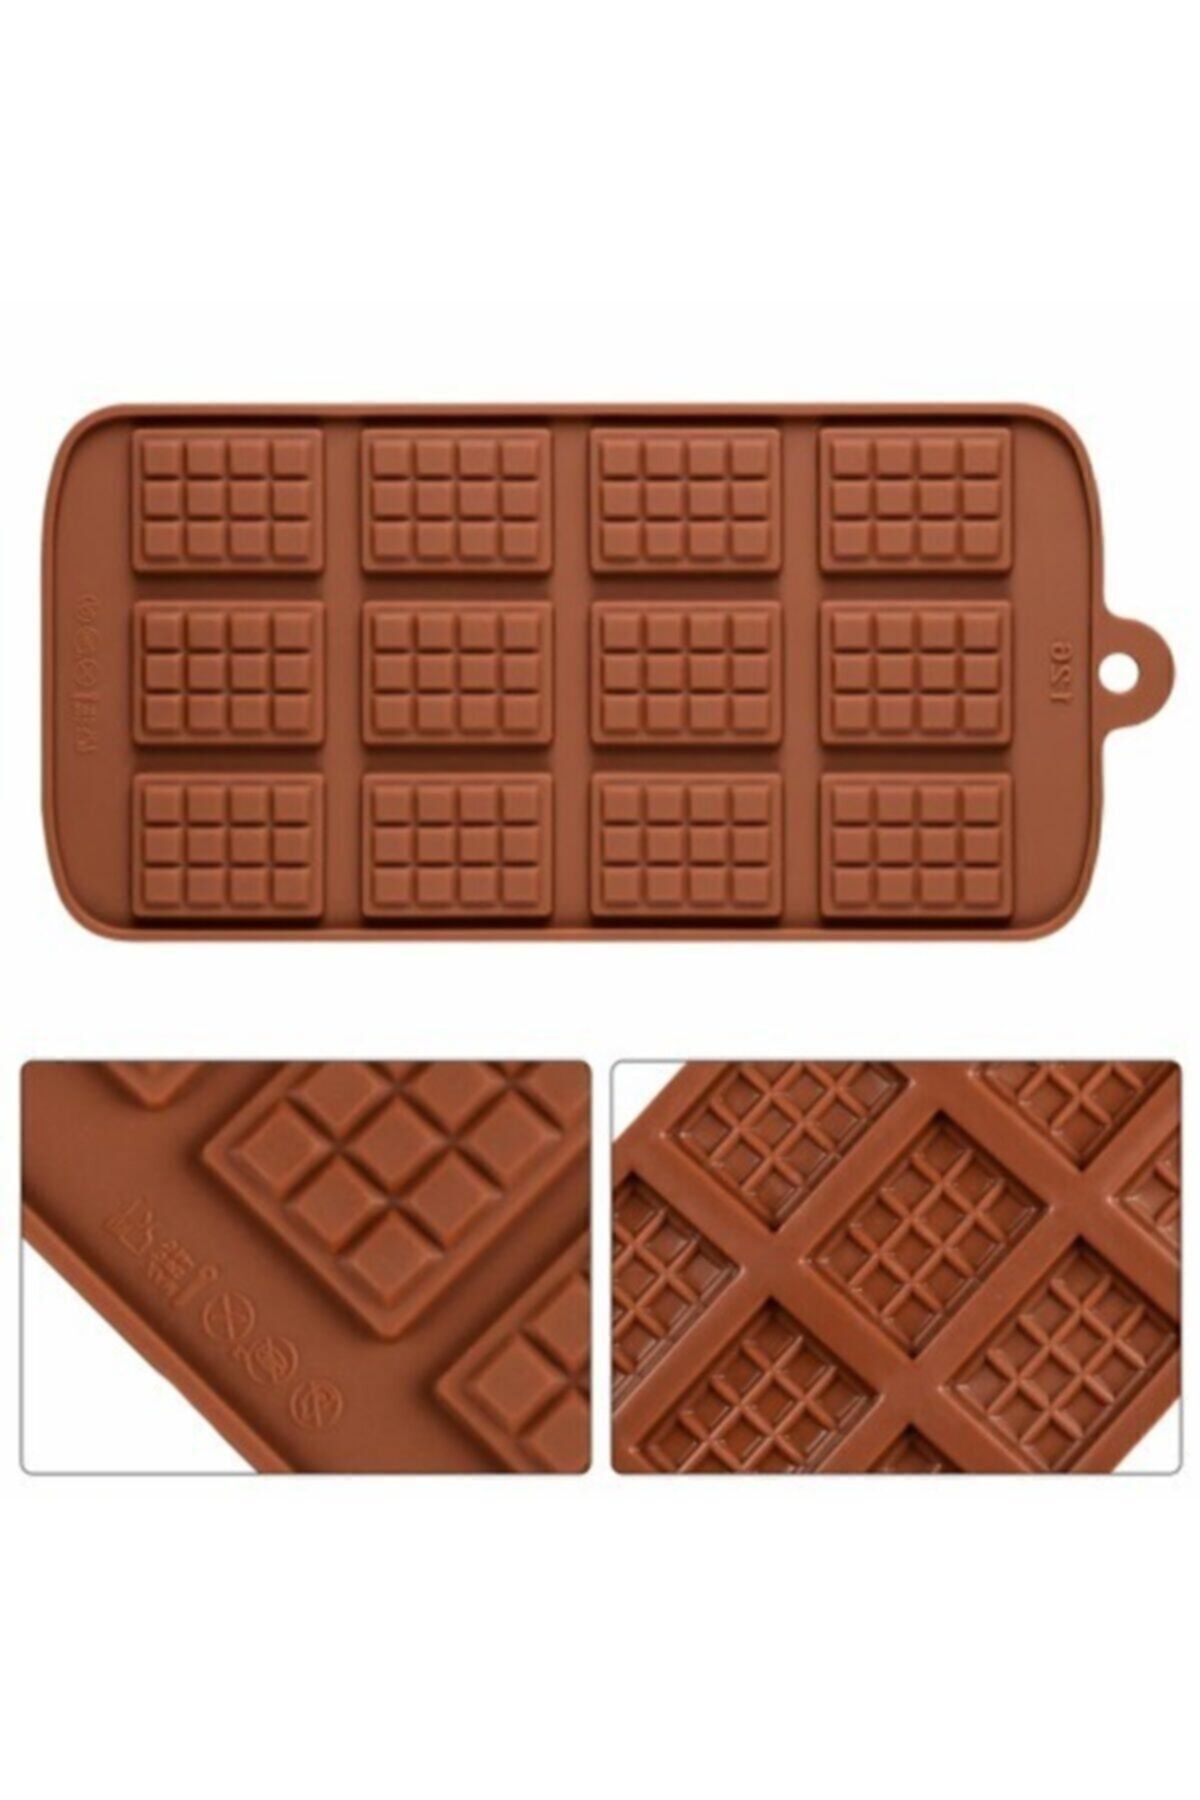 Mefe Mini Tablet Çikolata Kalıbı,12’li Kare Çikolata-şeker Silikon Kalıp